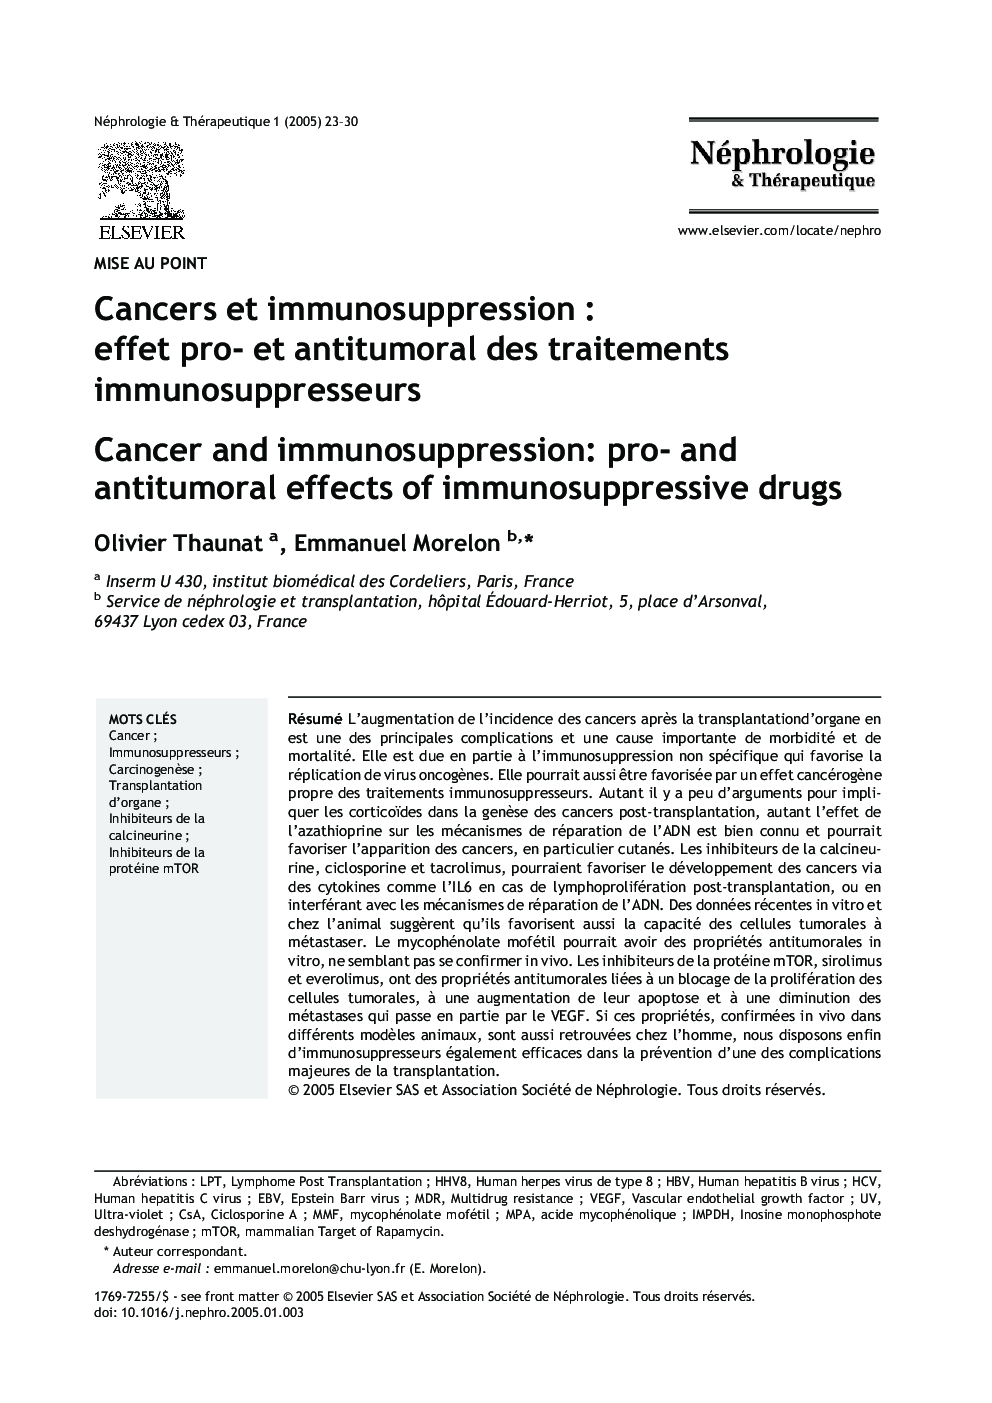 Cancers et immunosuppression : effet pro- et antitumoral des traitements immunosuppresseurs